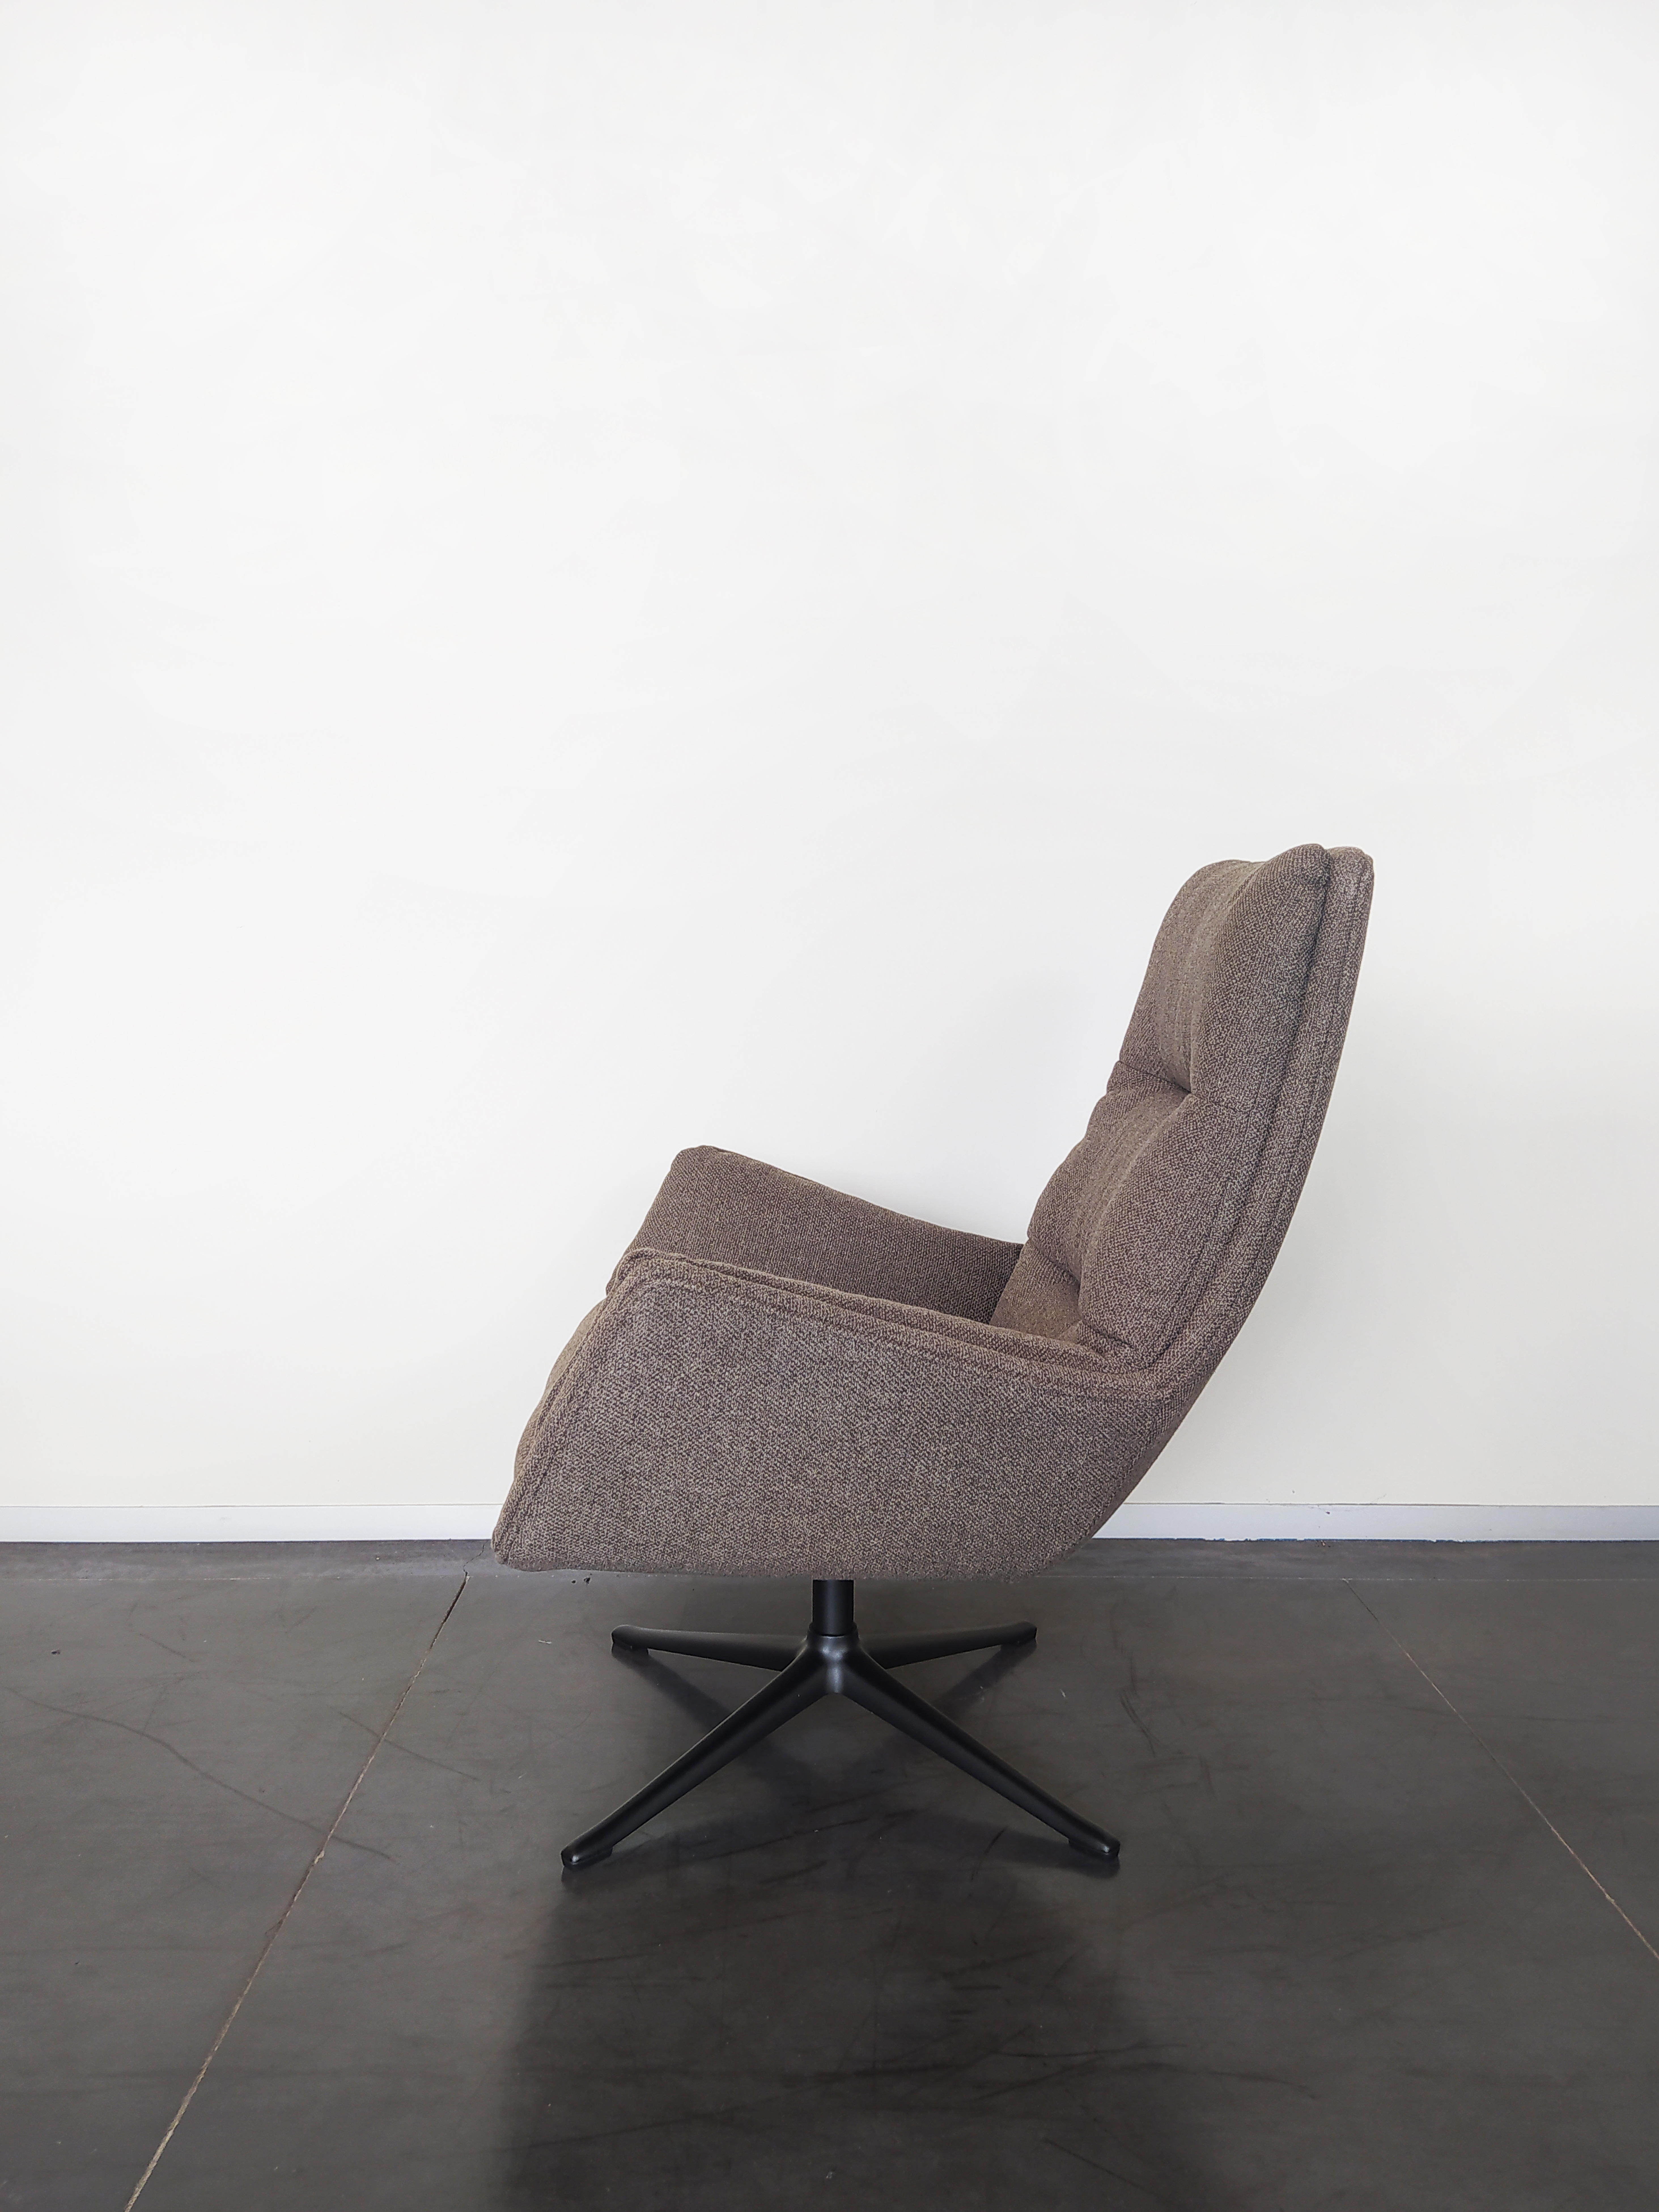 Evolution-hasselt-interieurwinkel-meubelen-design-stof-fauteuil-otto-zijaanzicht